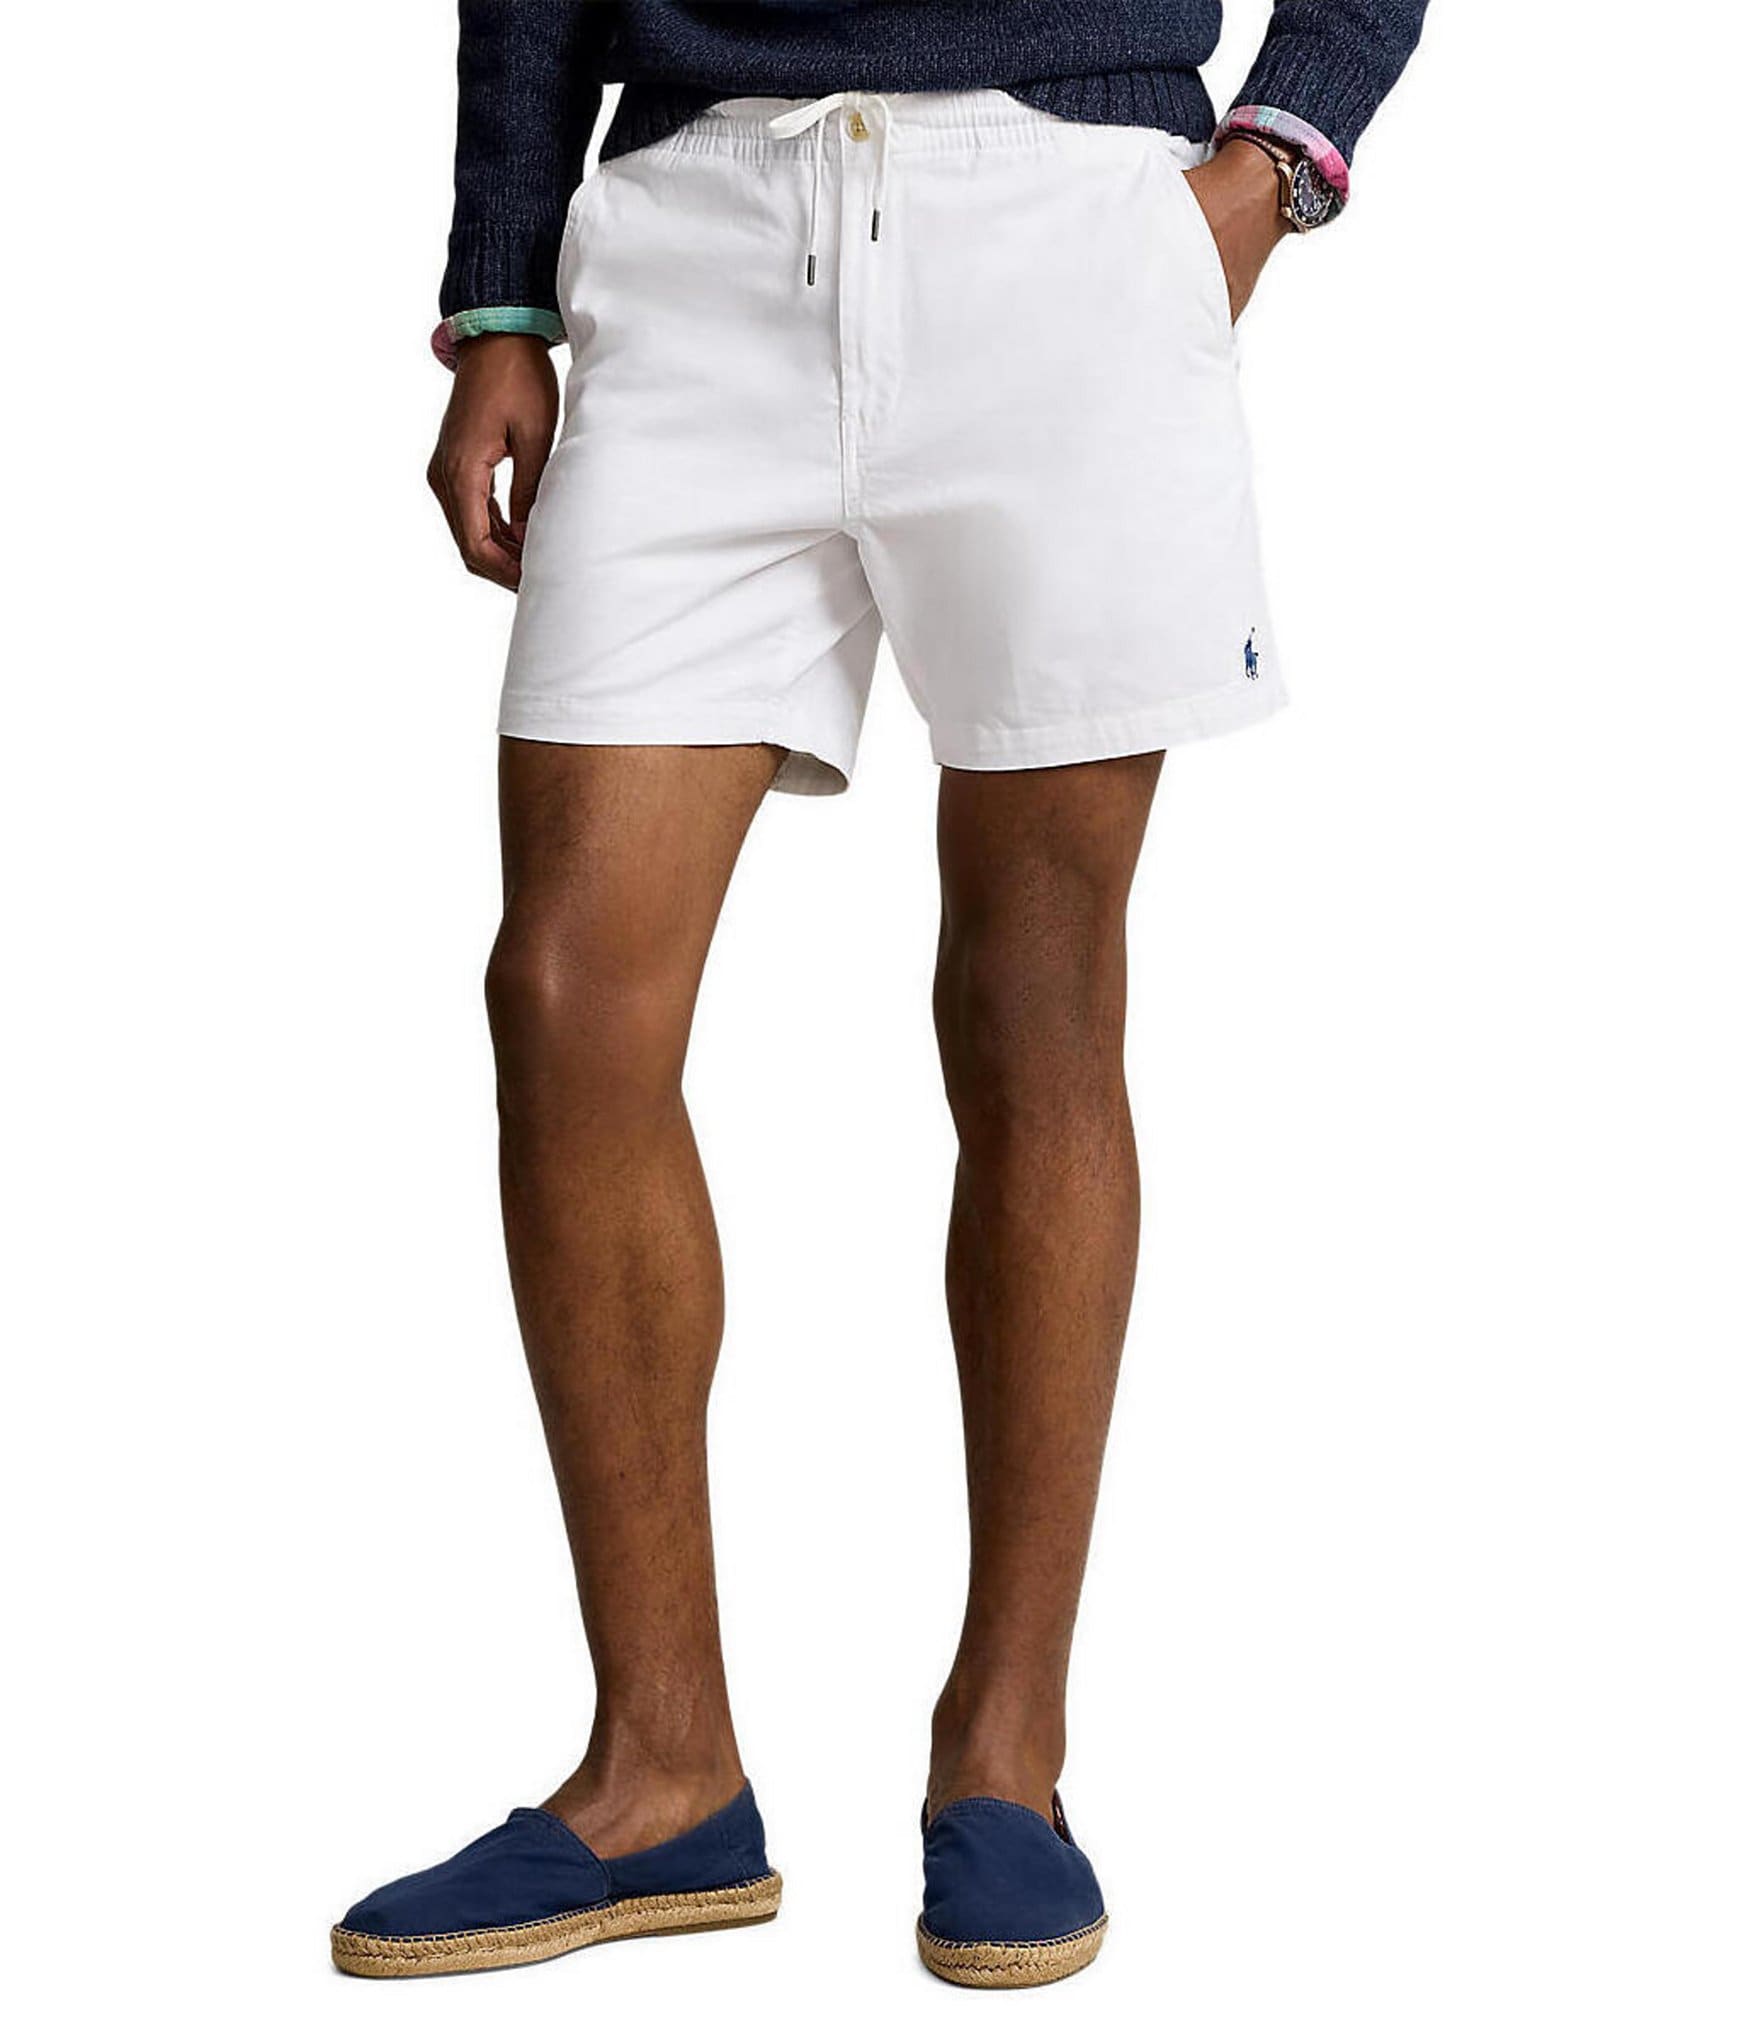 Polo Ralph Lauren Shorts - Classic - White w. Lace